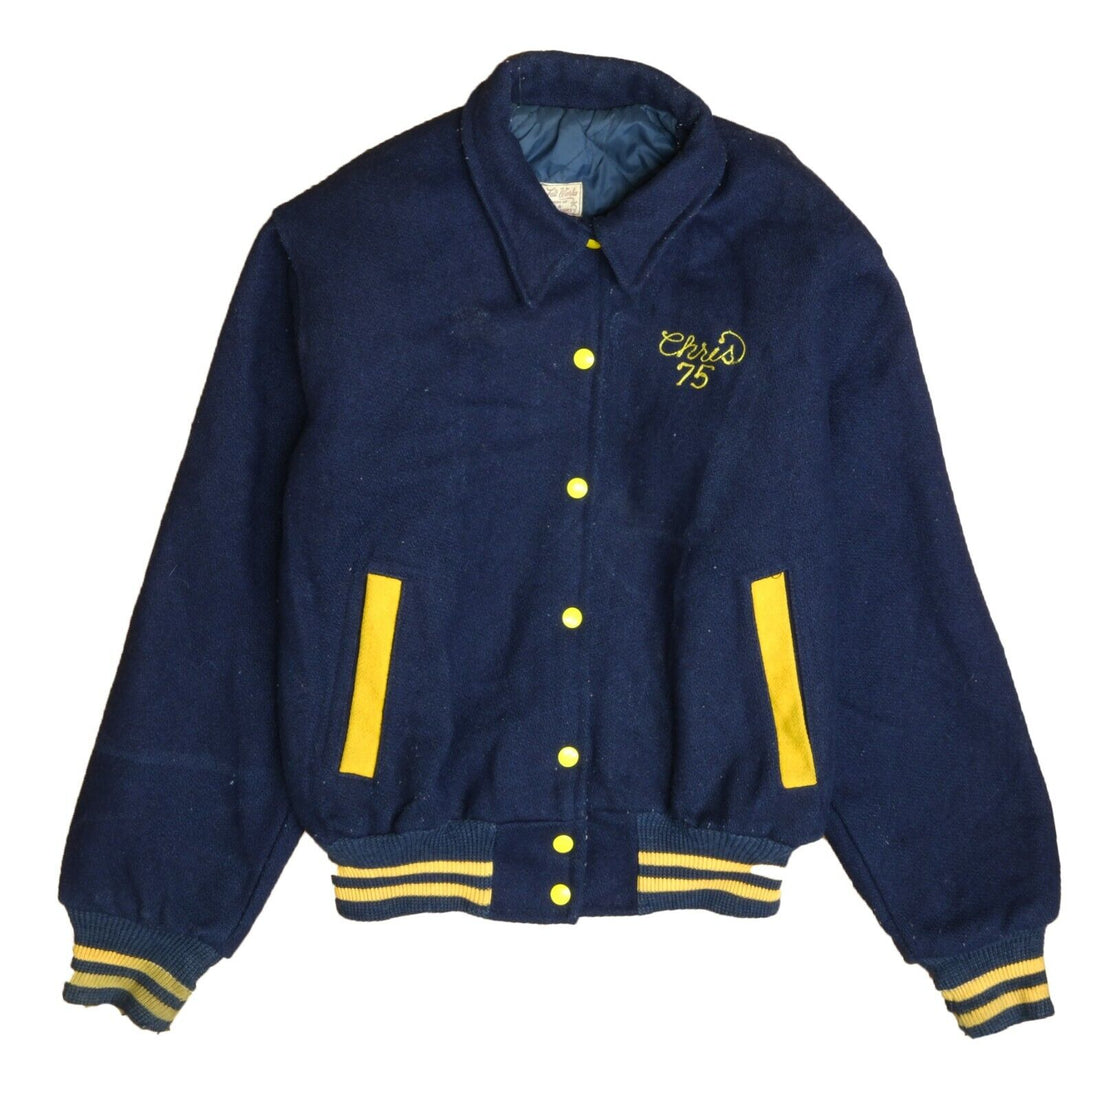 Vintage Mount Union Cheerleader Wool Varsity Jacket Size Small 1975 70s